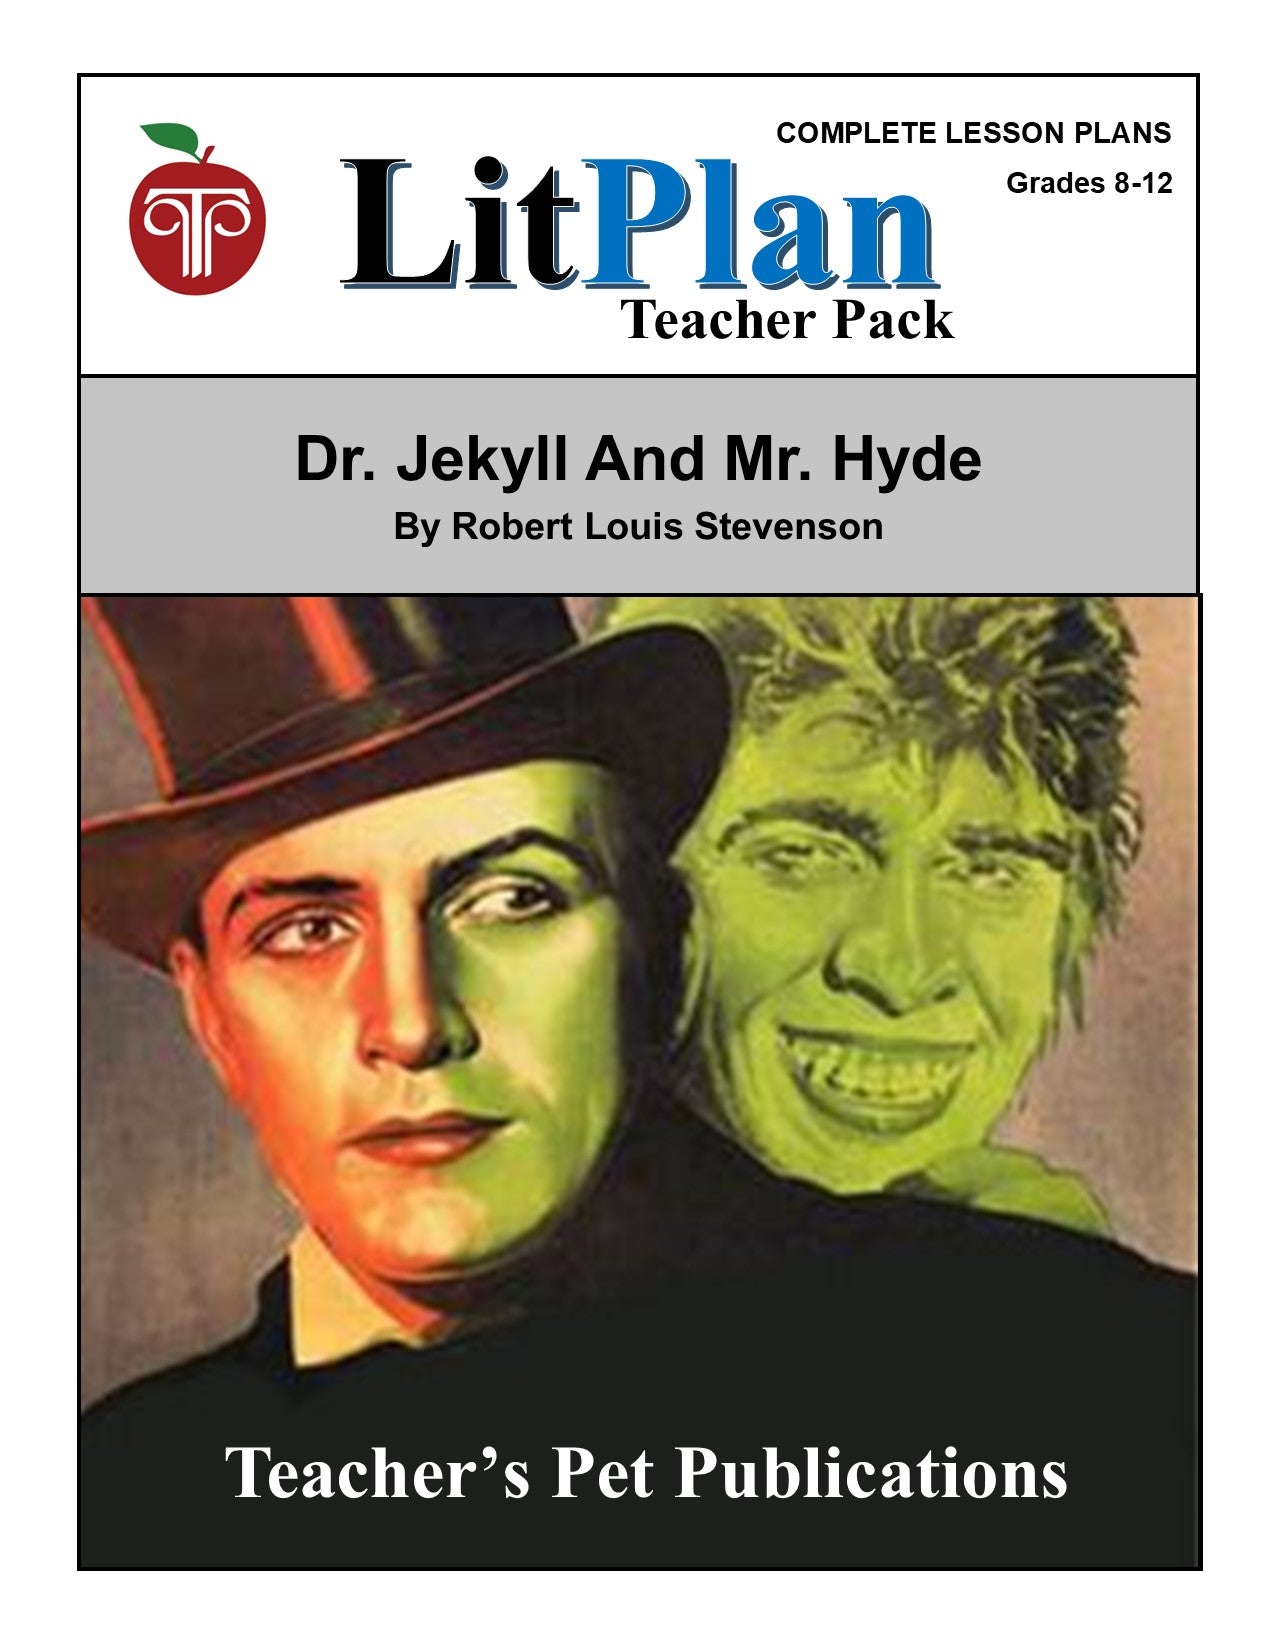 Dr. Jekyll and Mr. Hyde: LitPlan Teacher Pack Grades 8-12